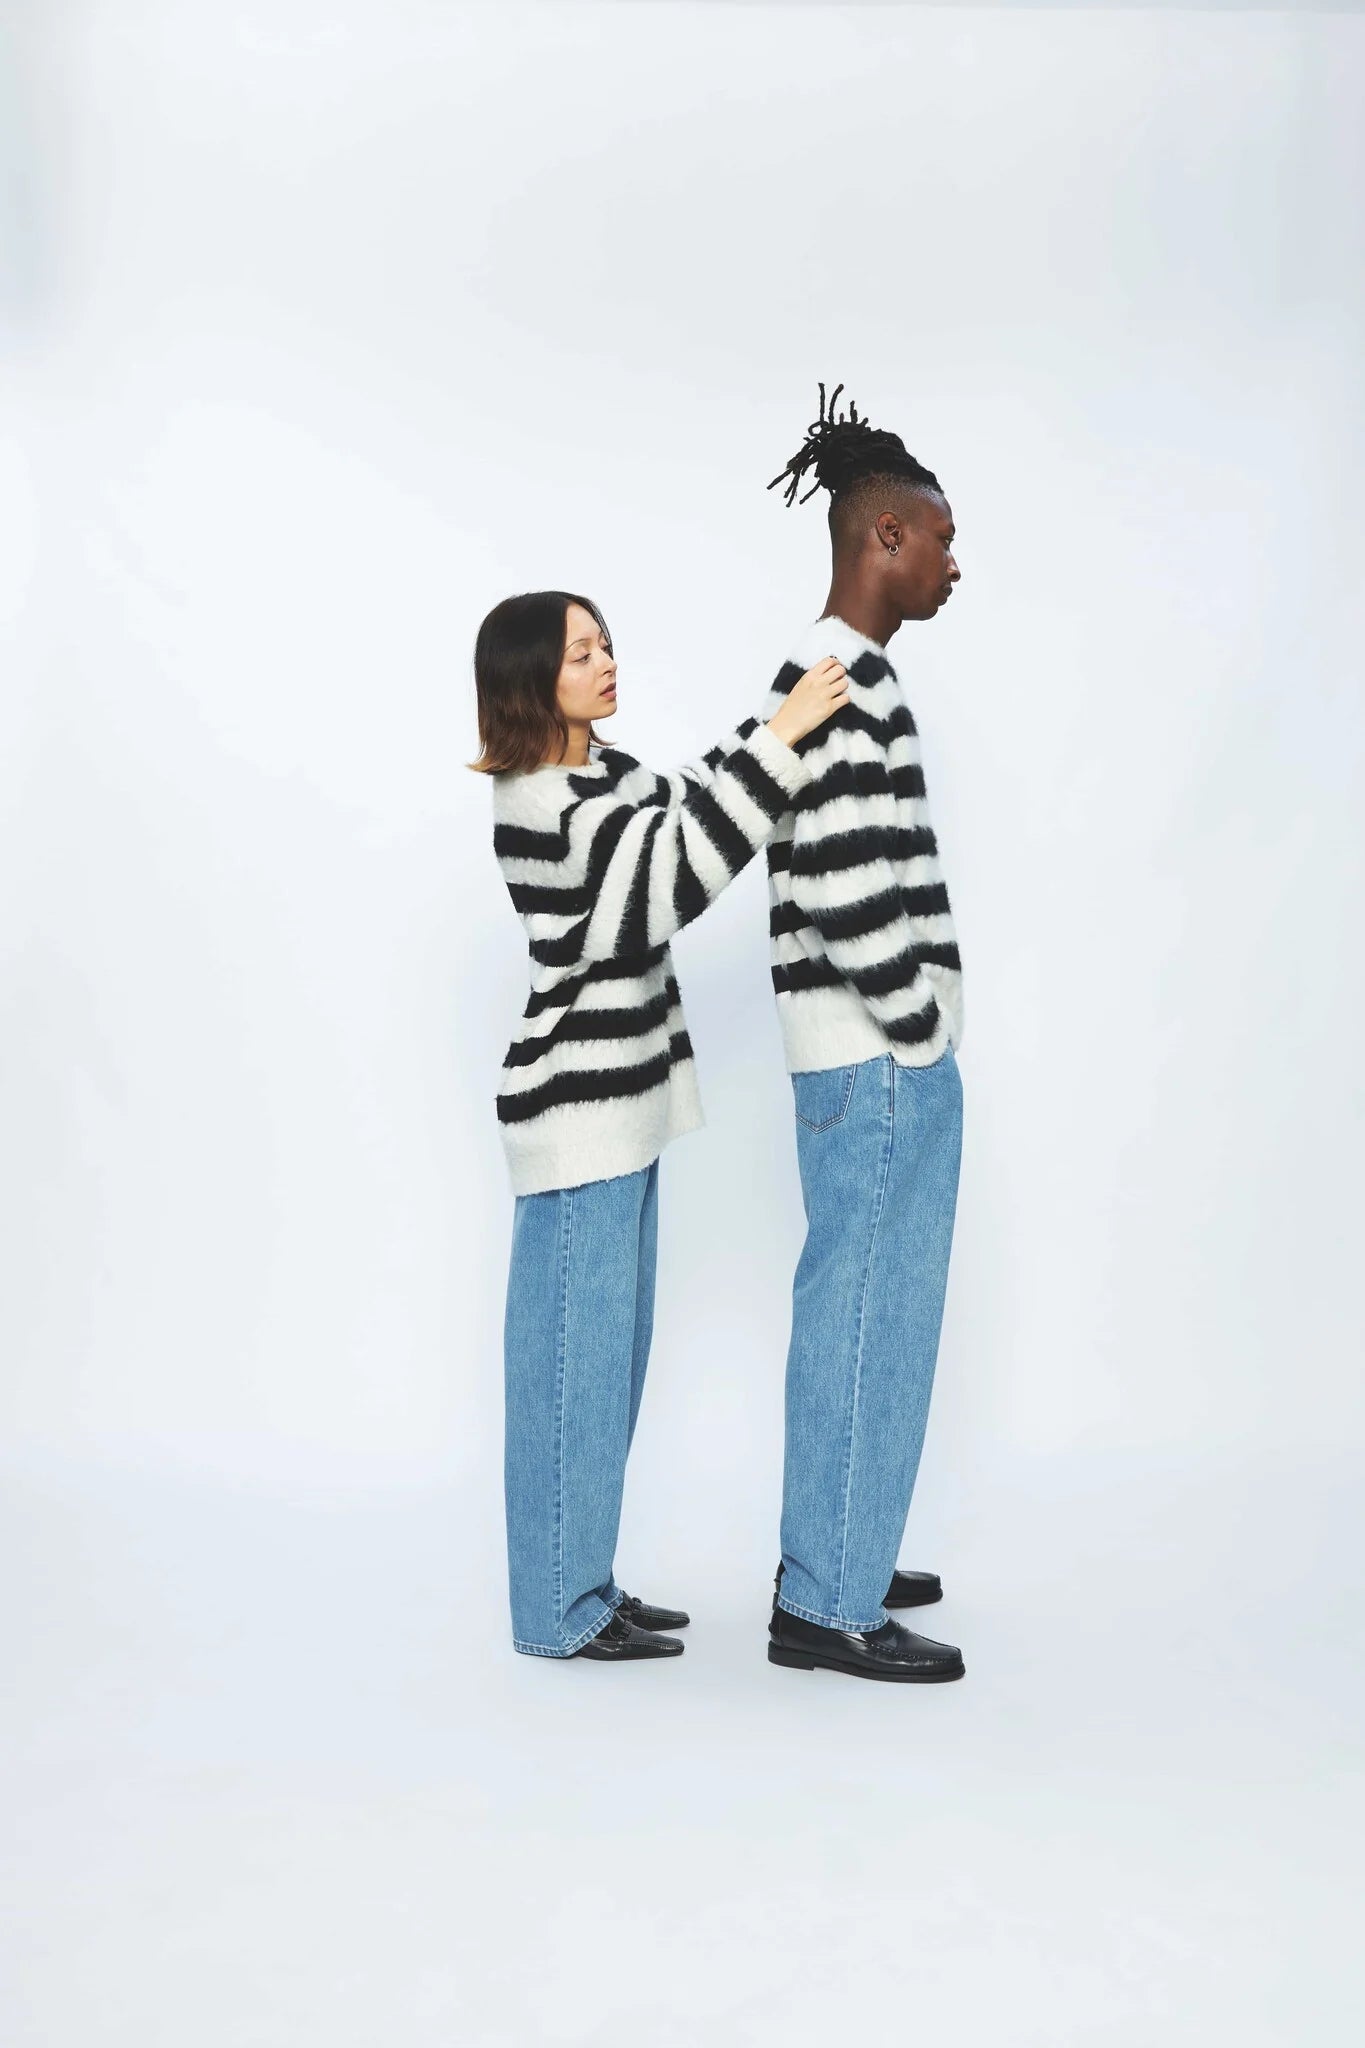 Sweater Stripe Black&White